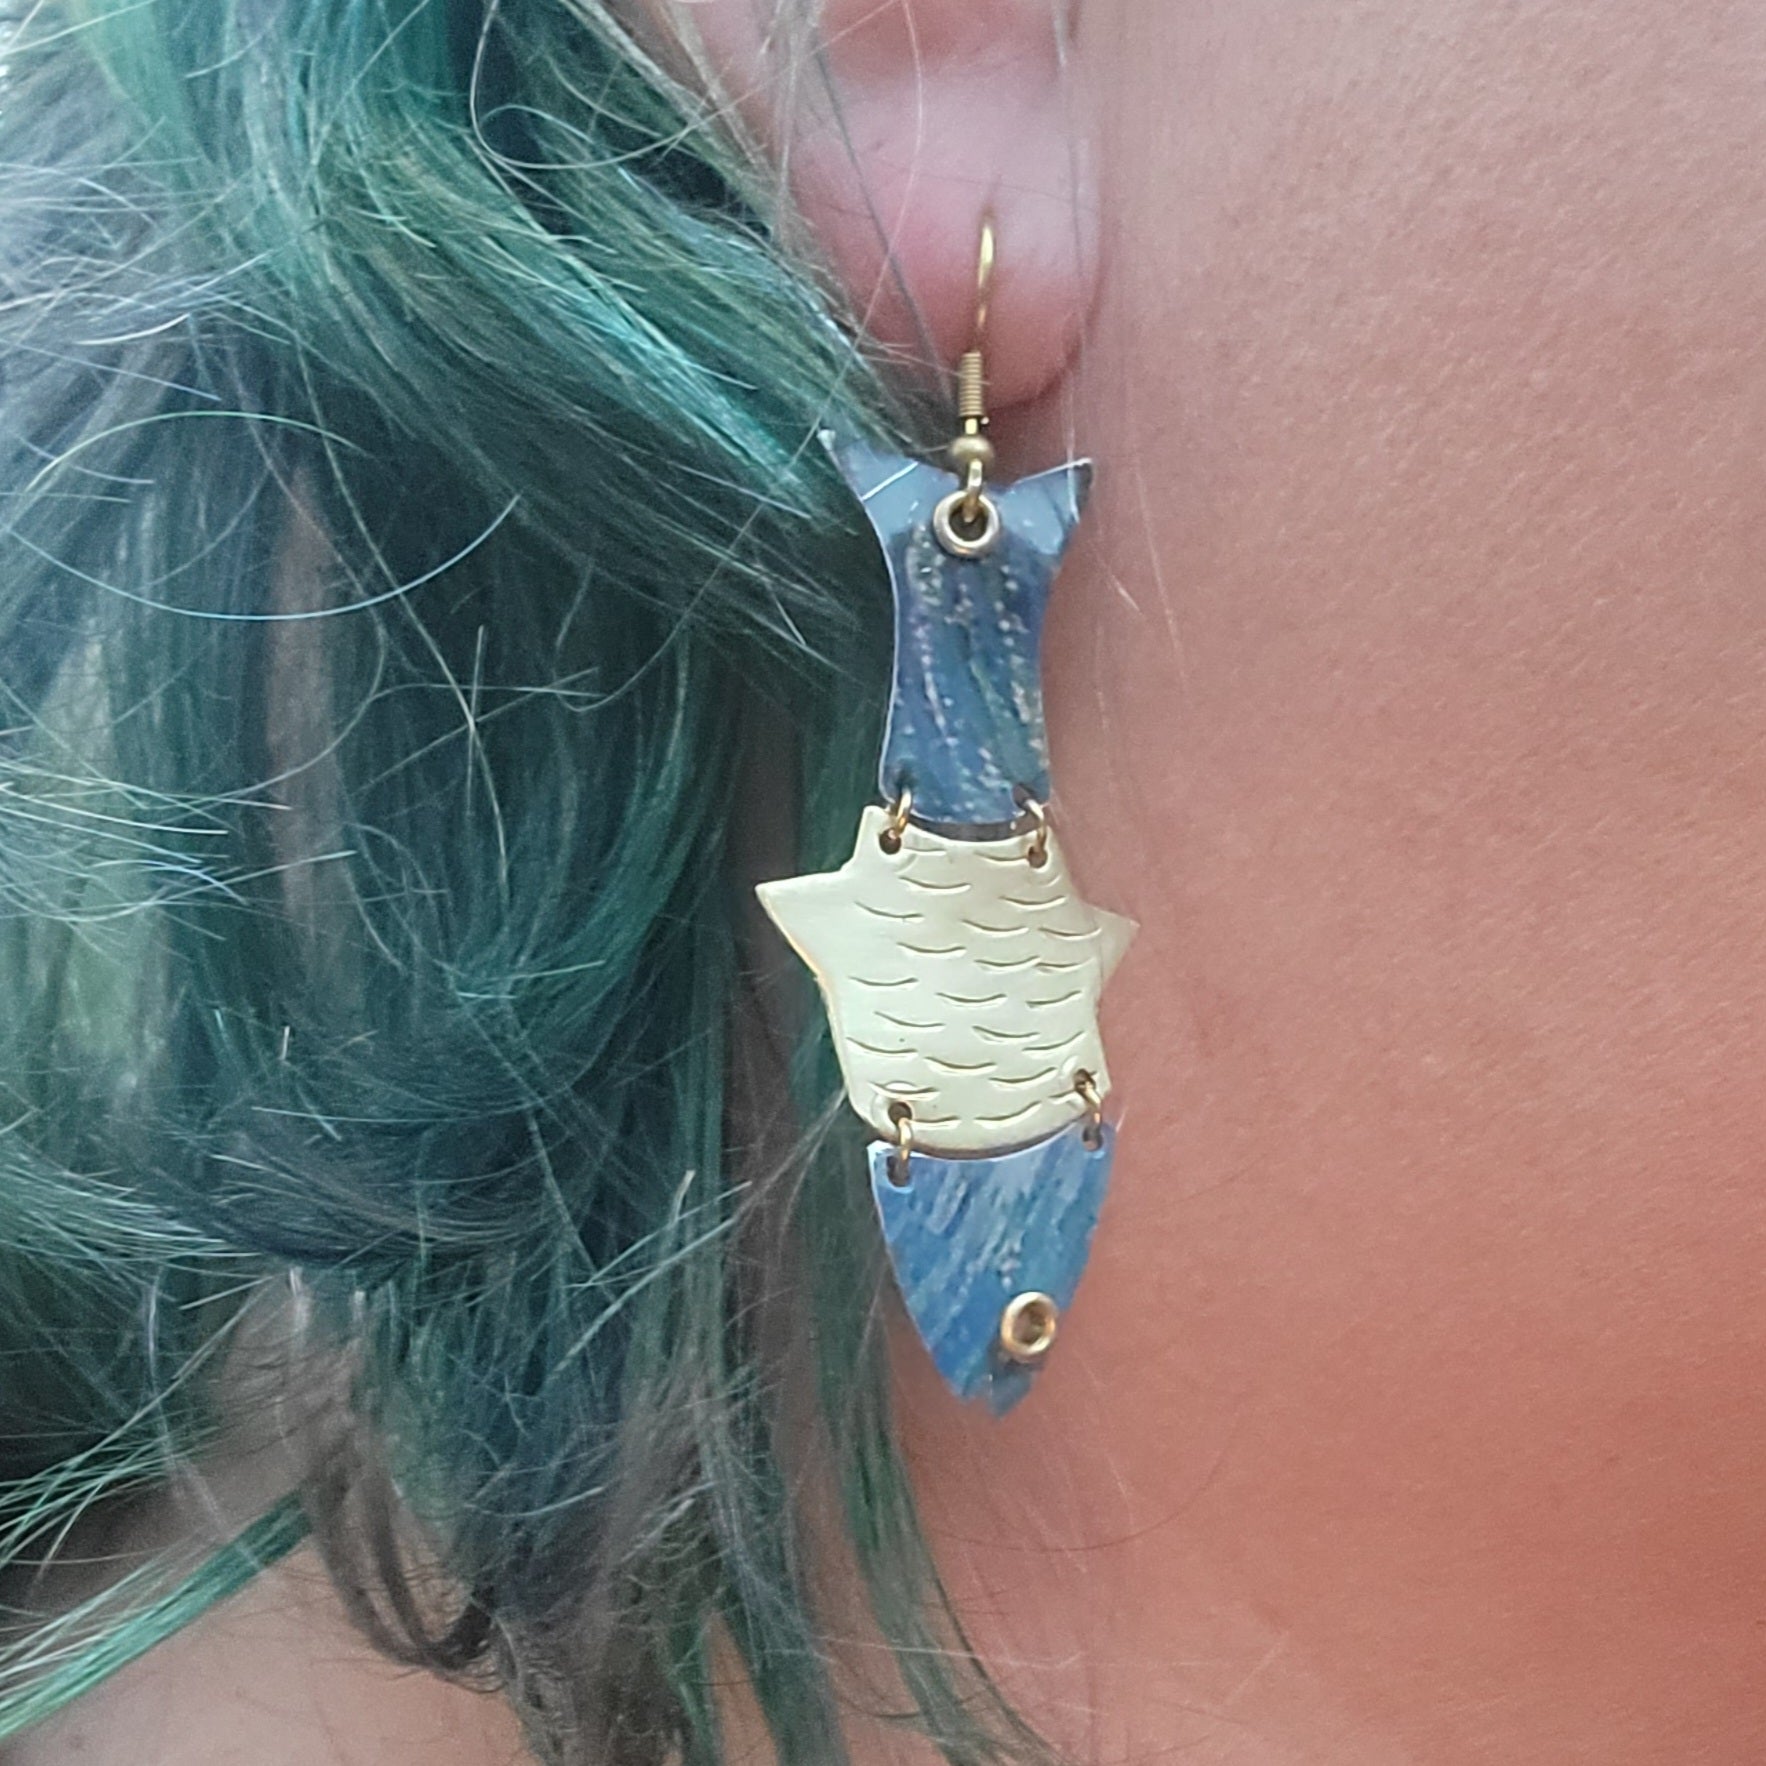 Kinetic Fish Earrings - Repurposed Tin Jewelry